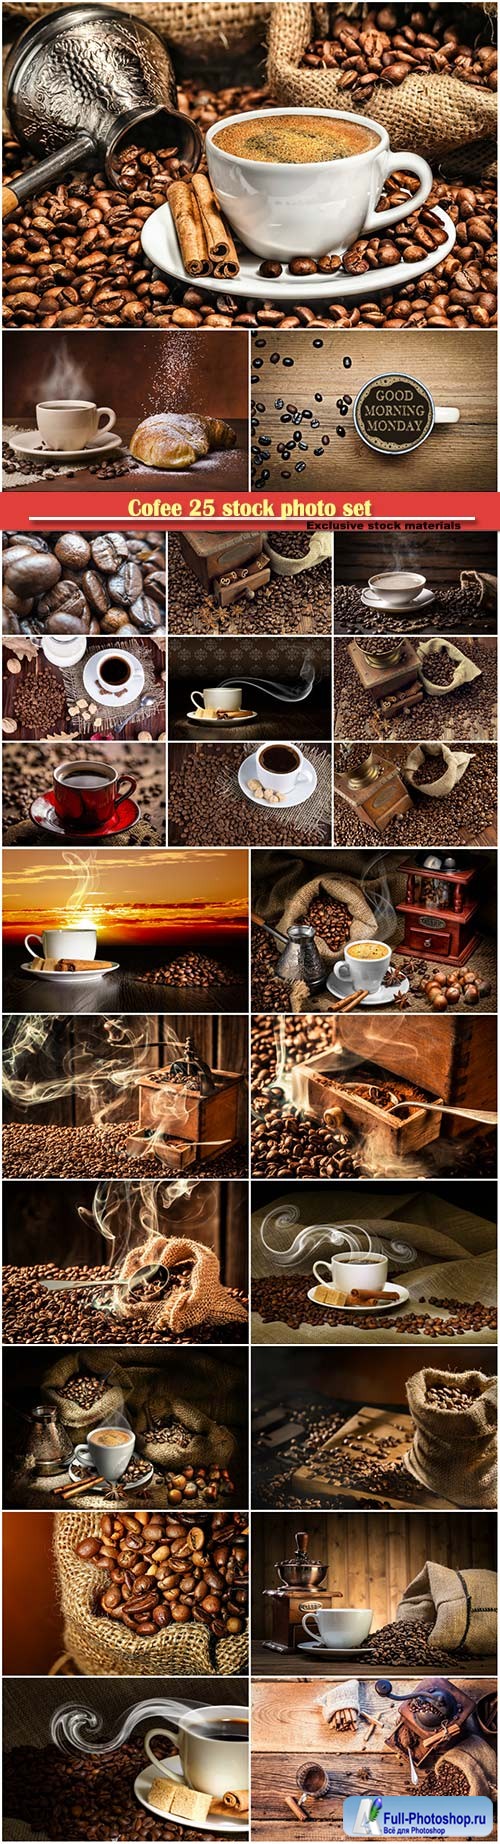 Cofee 25 stock photo set